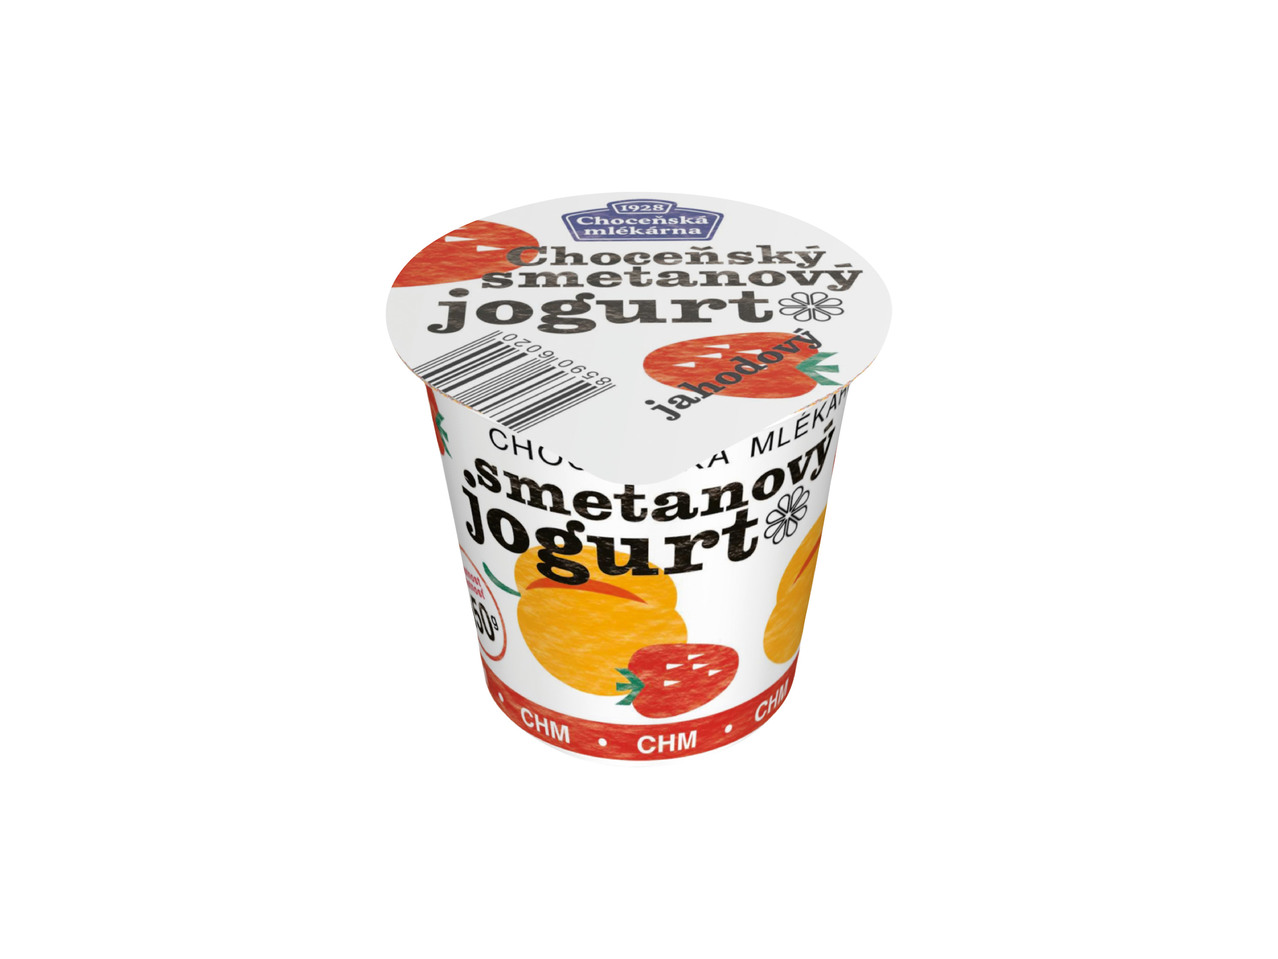 Choceňský smetanový jogurt